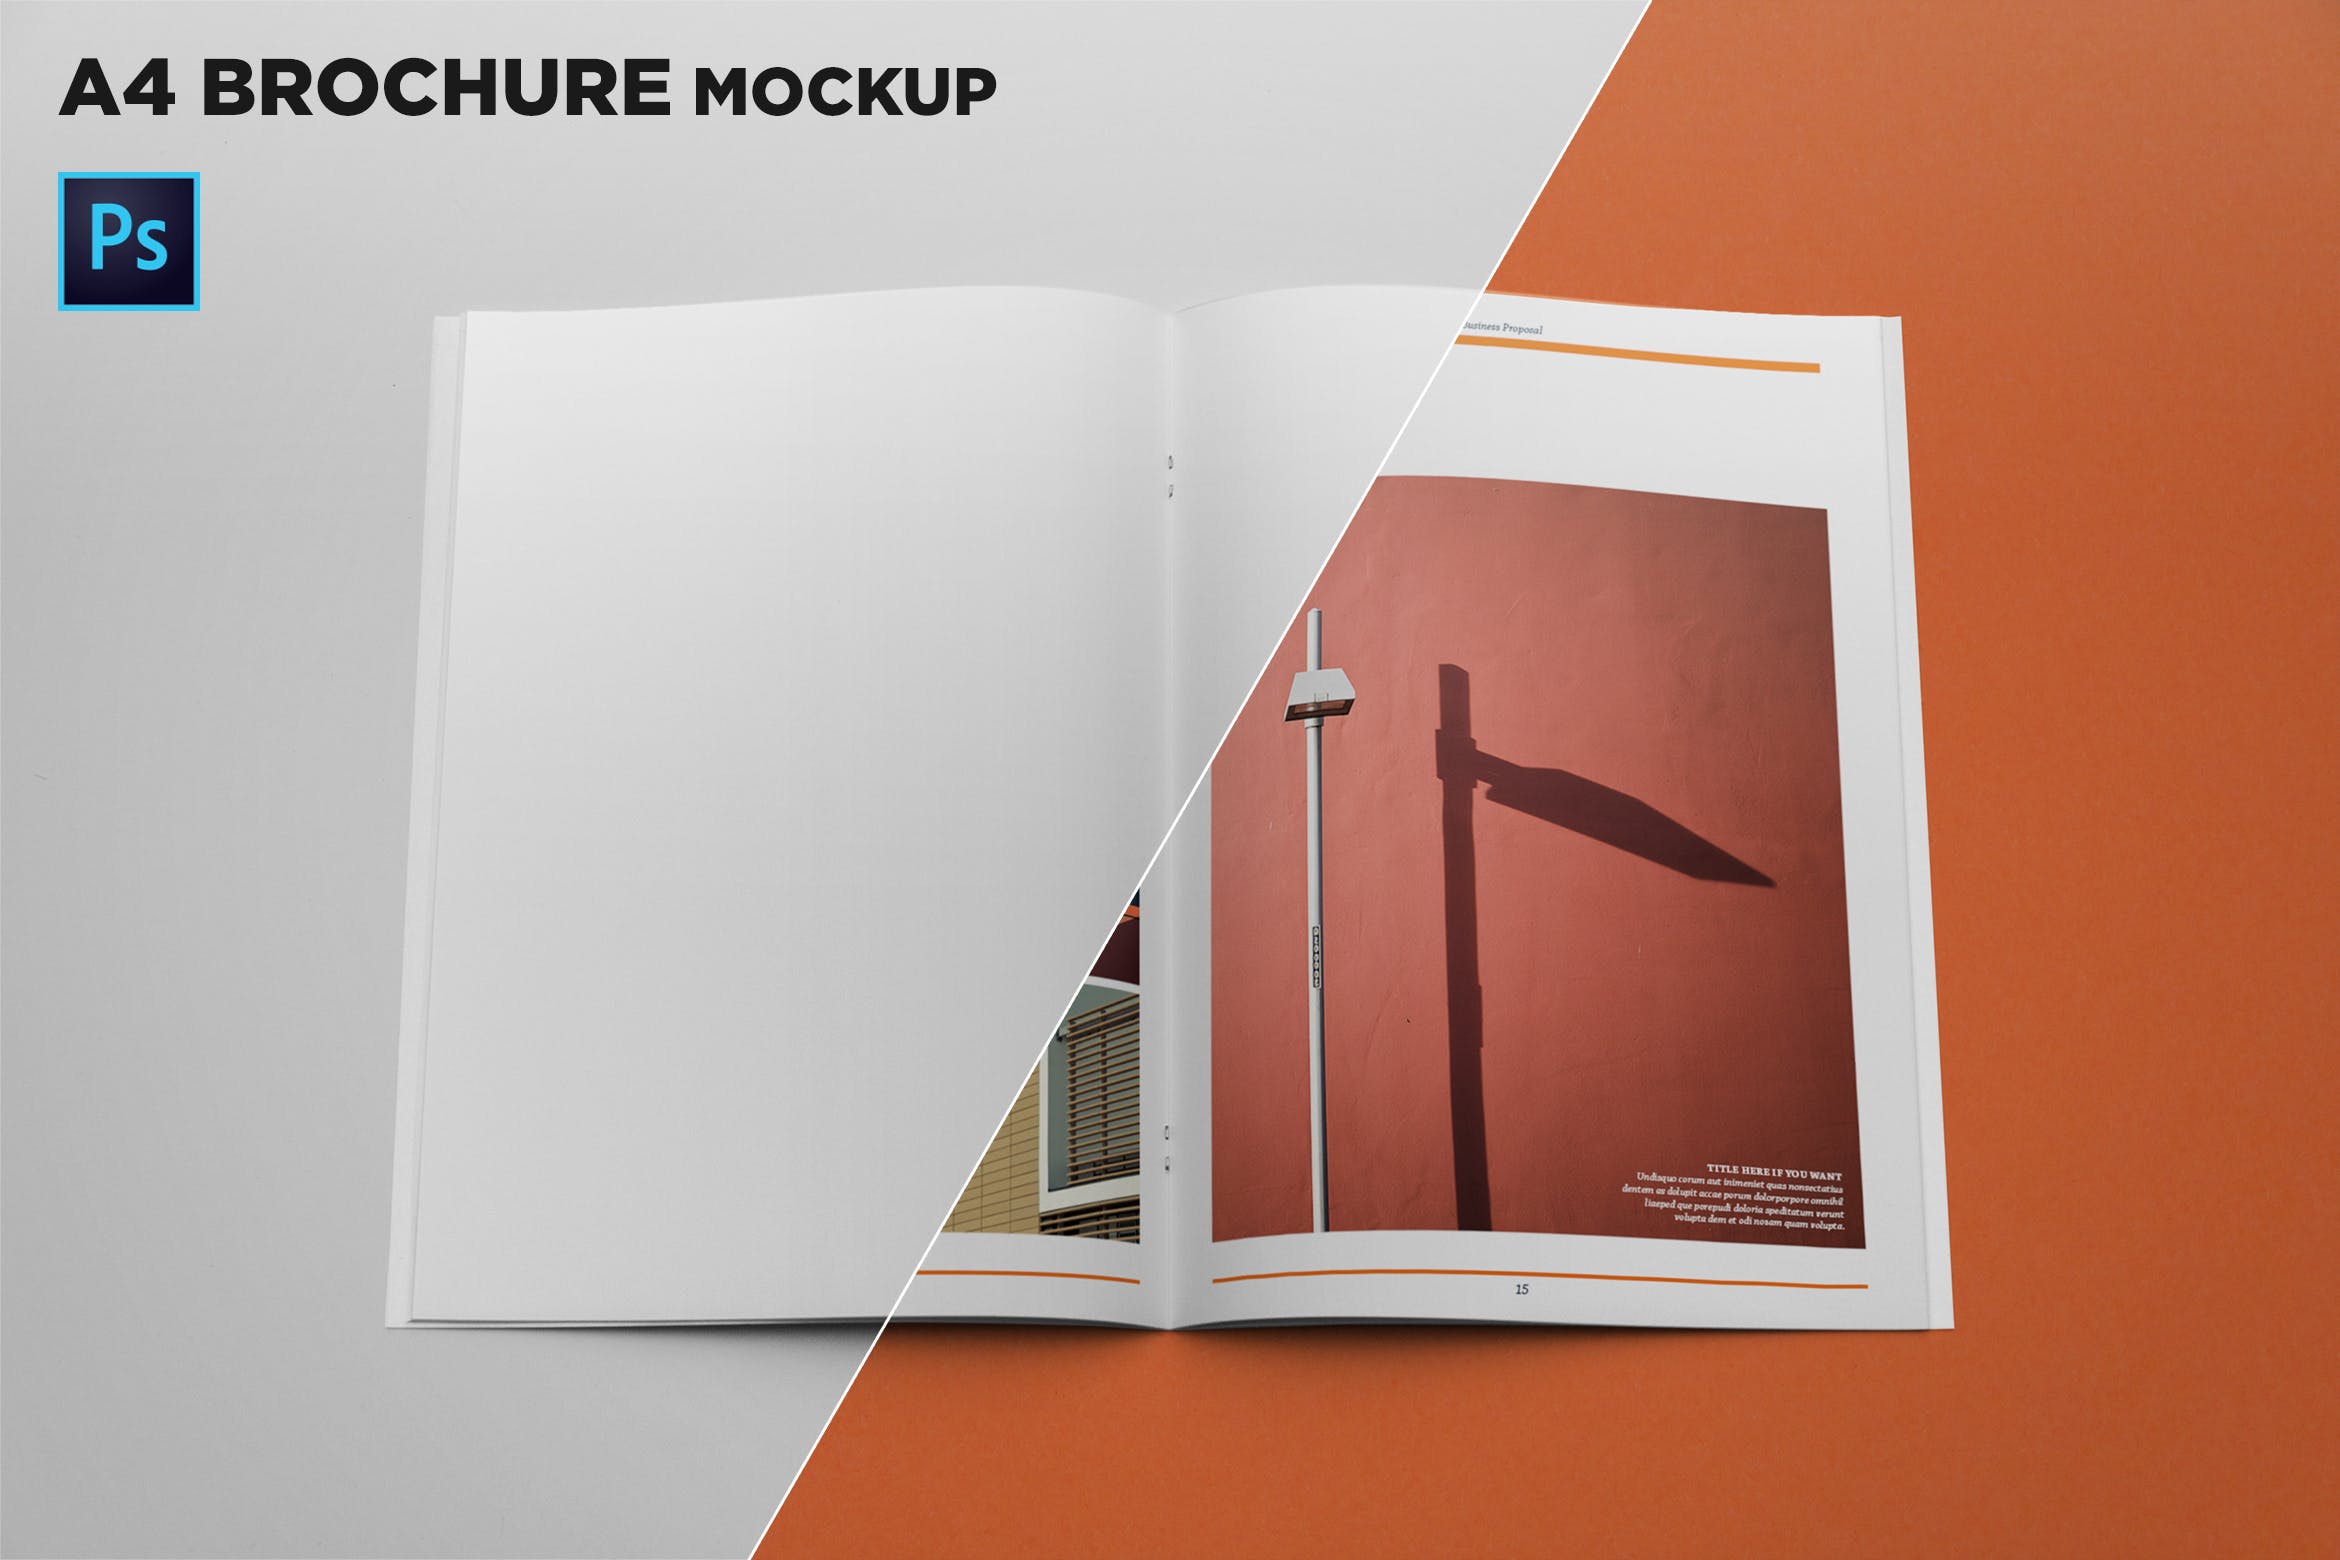 A4宣传小册子/企业画册内页设计顶视图样机16图库精选 A4 Brochure Mockup Top View插图